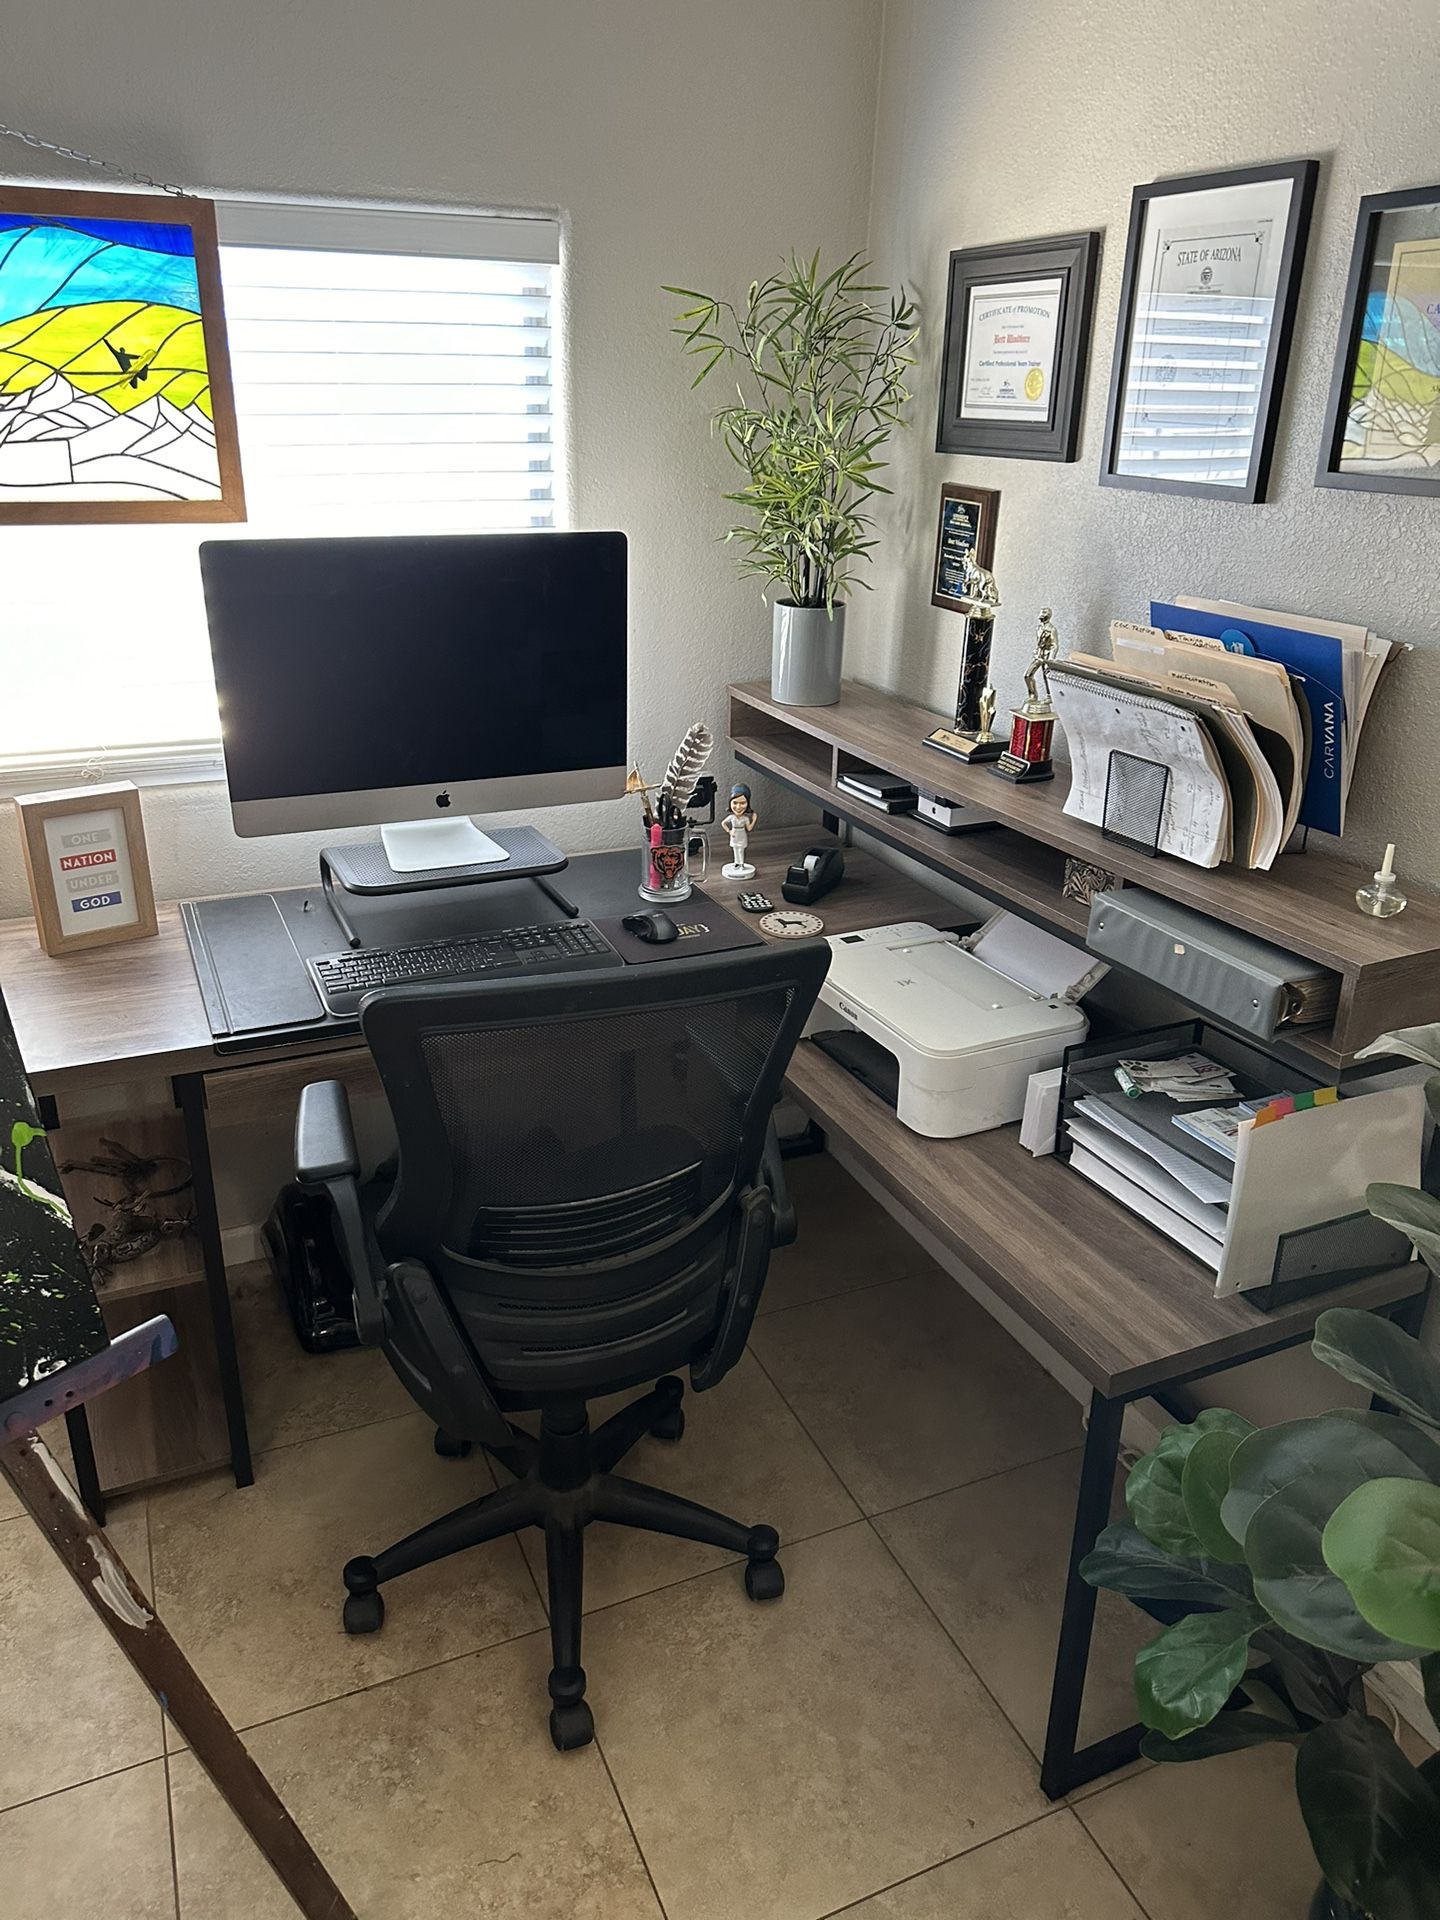 Office - Mac, Desk, Printer Set Up